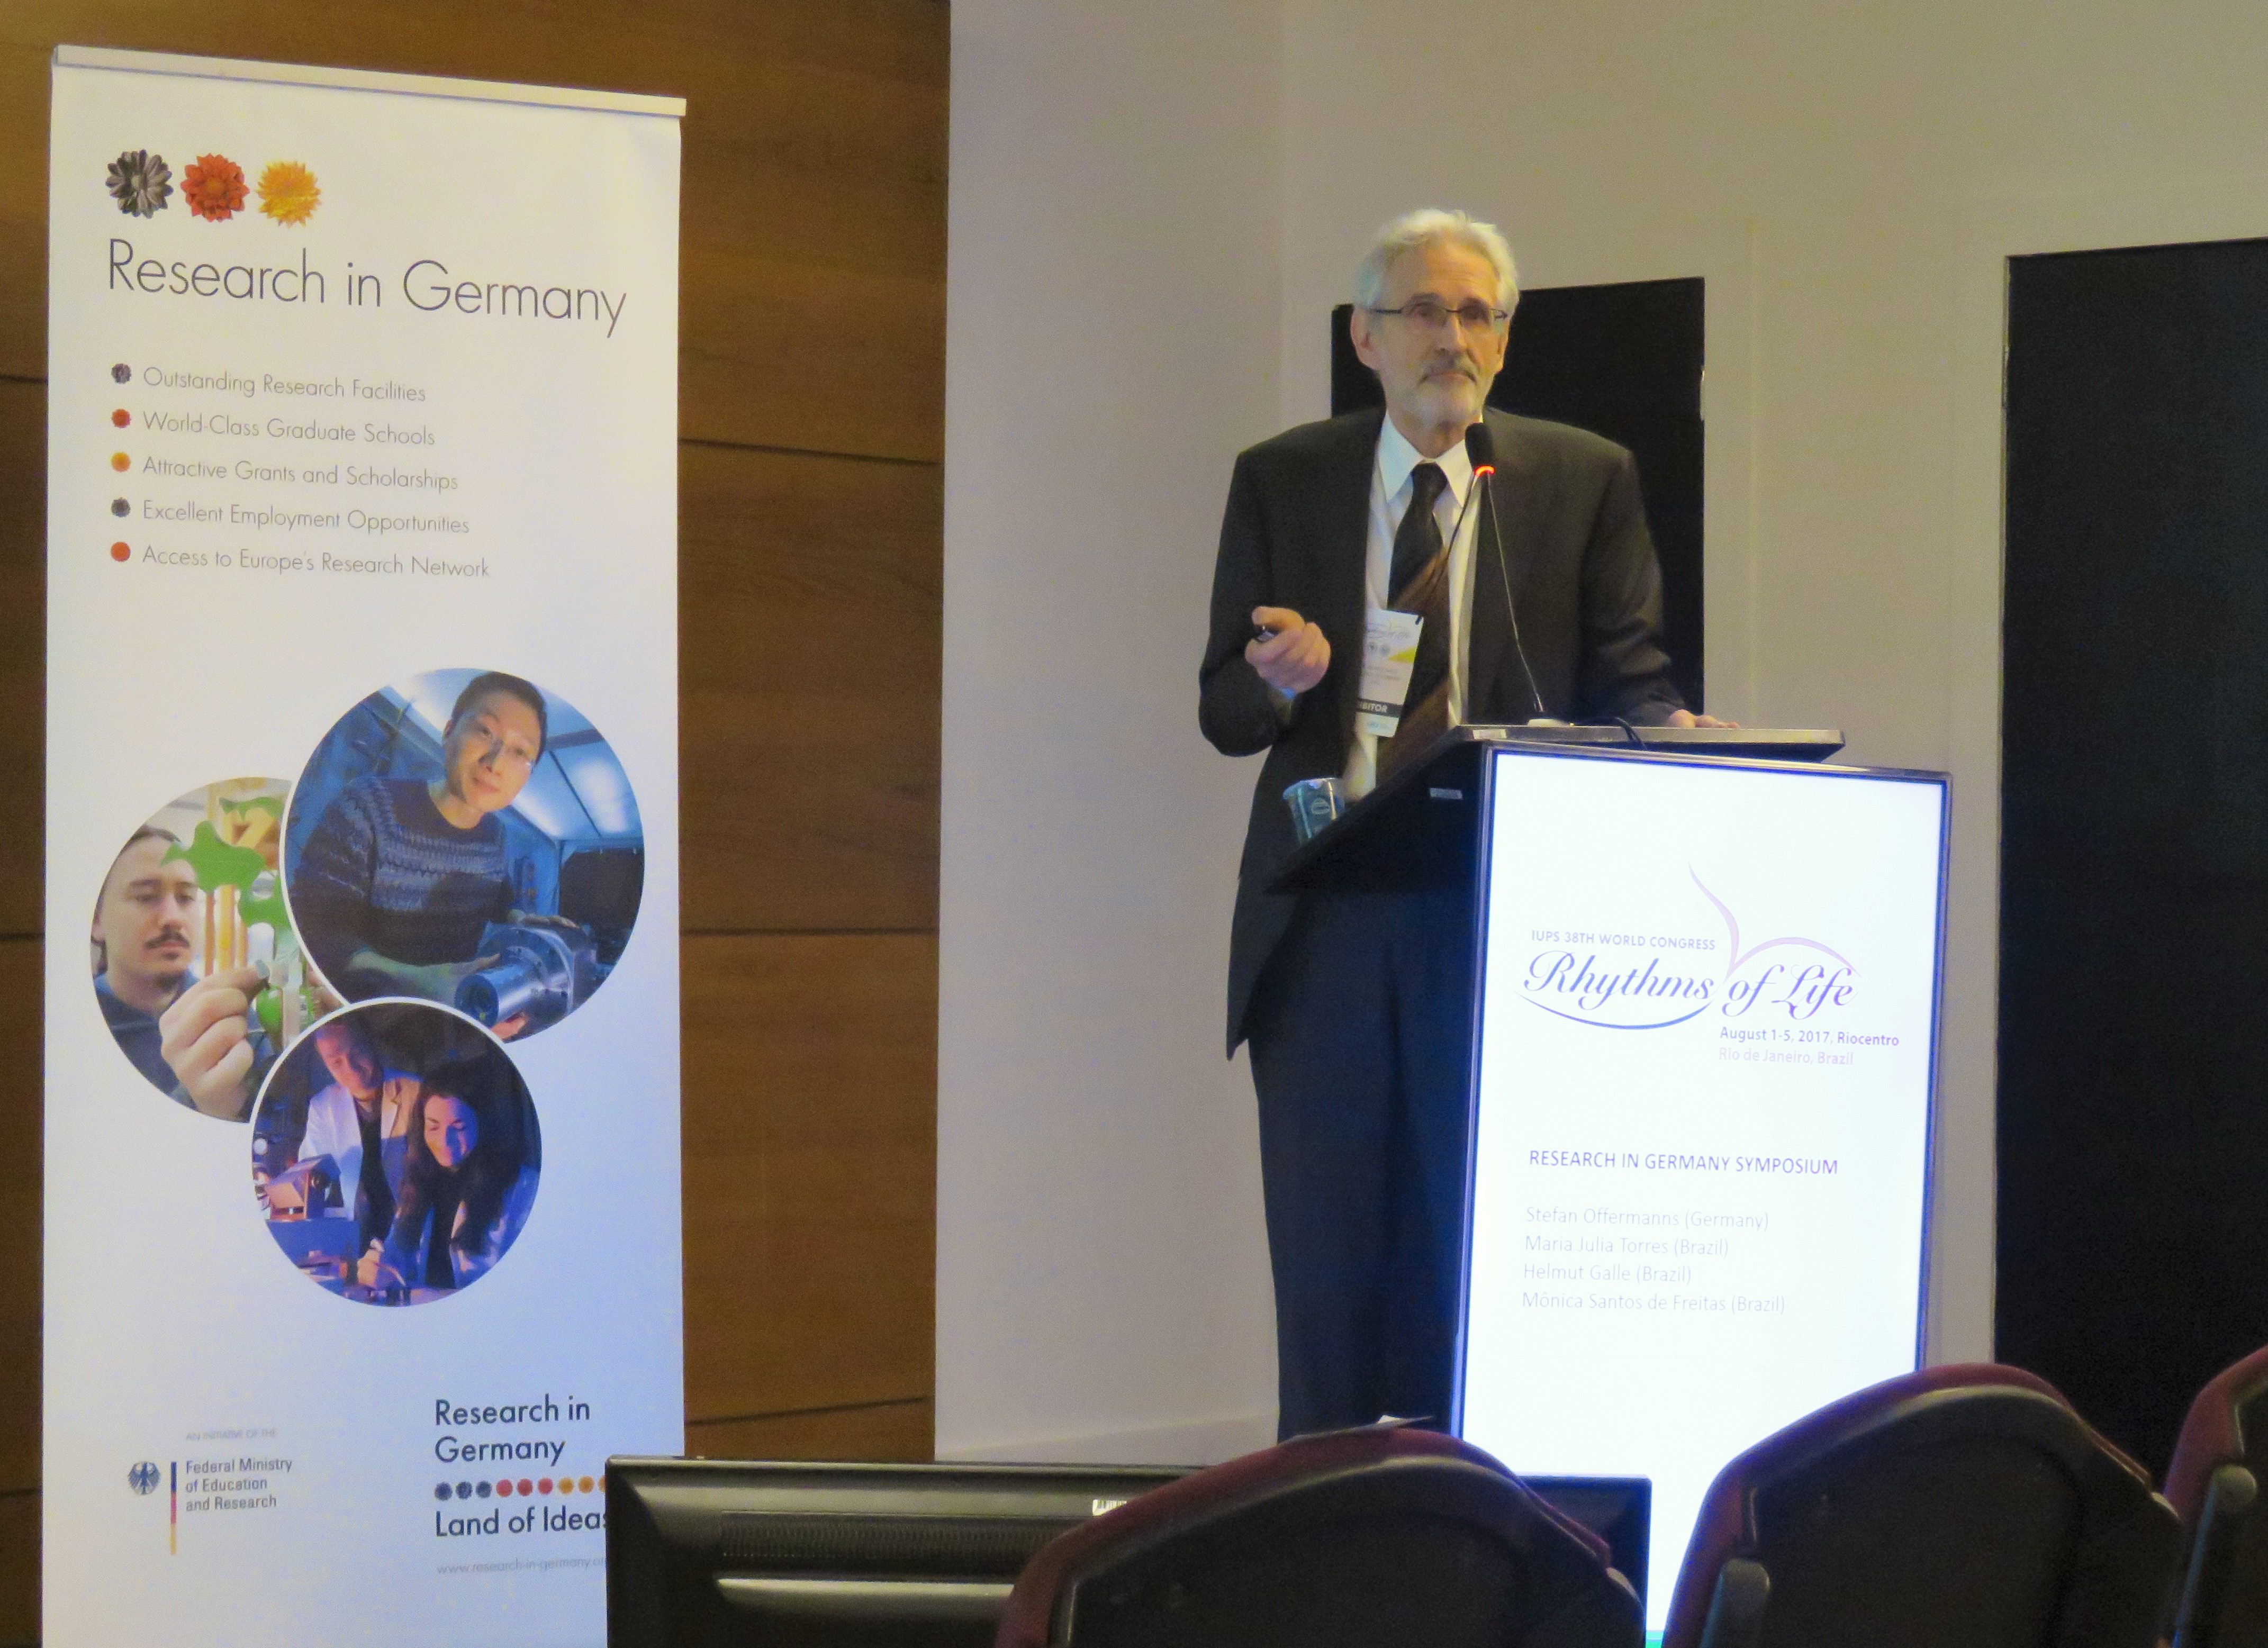 Helmut Galle (DFG Liaison Scientist) spoke about the DFG’s funding programmes